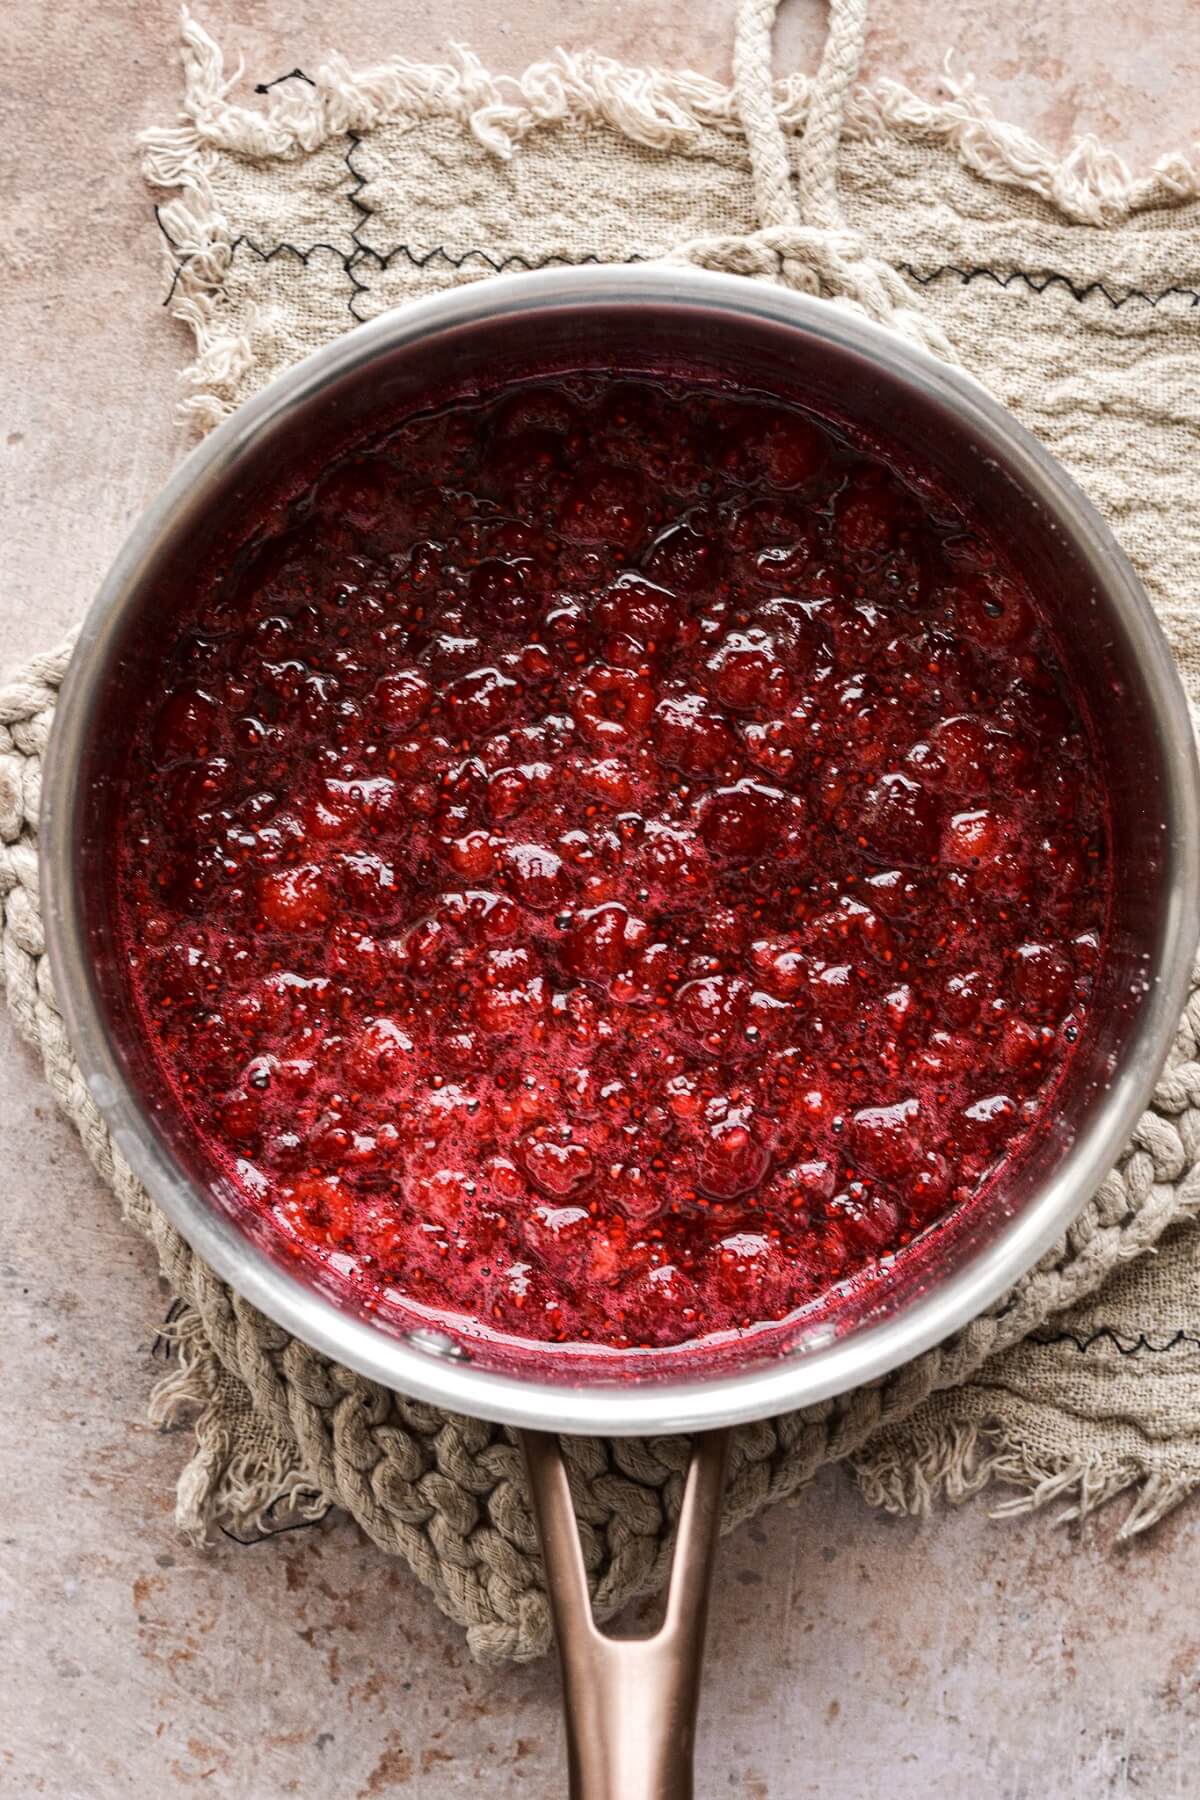 Steps for making raspberry puree.